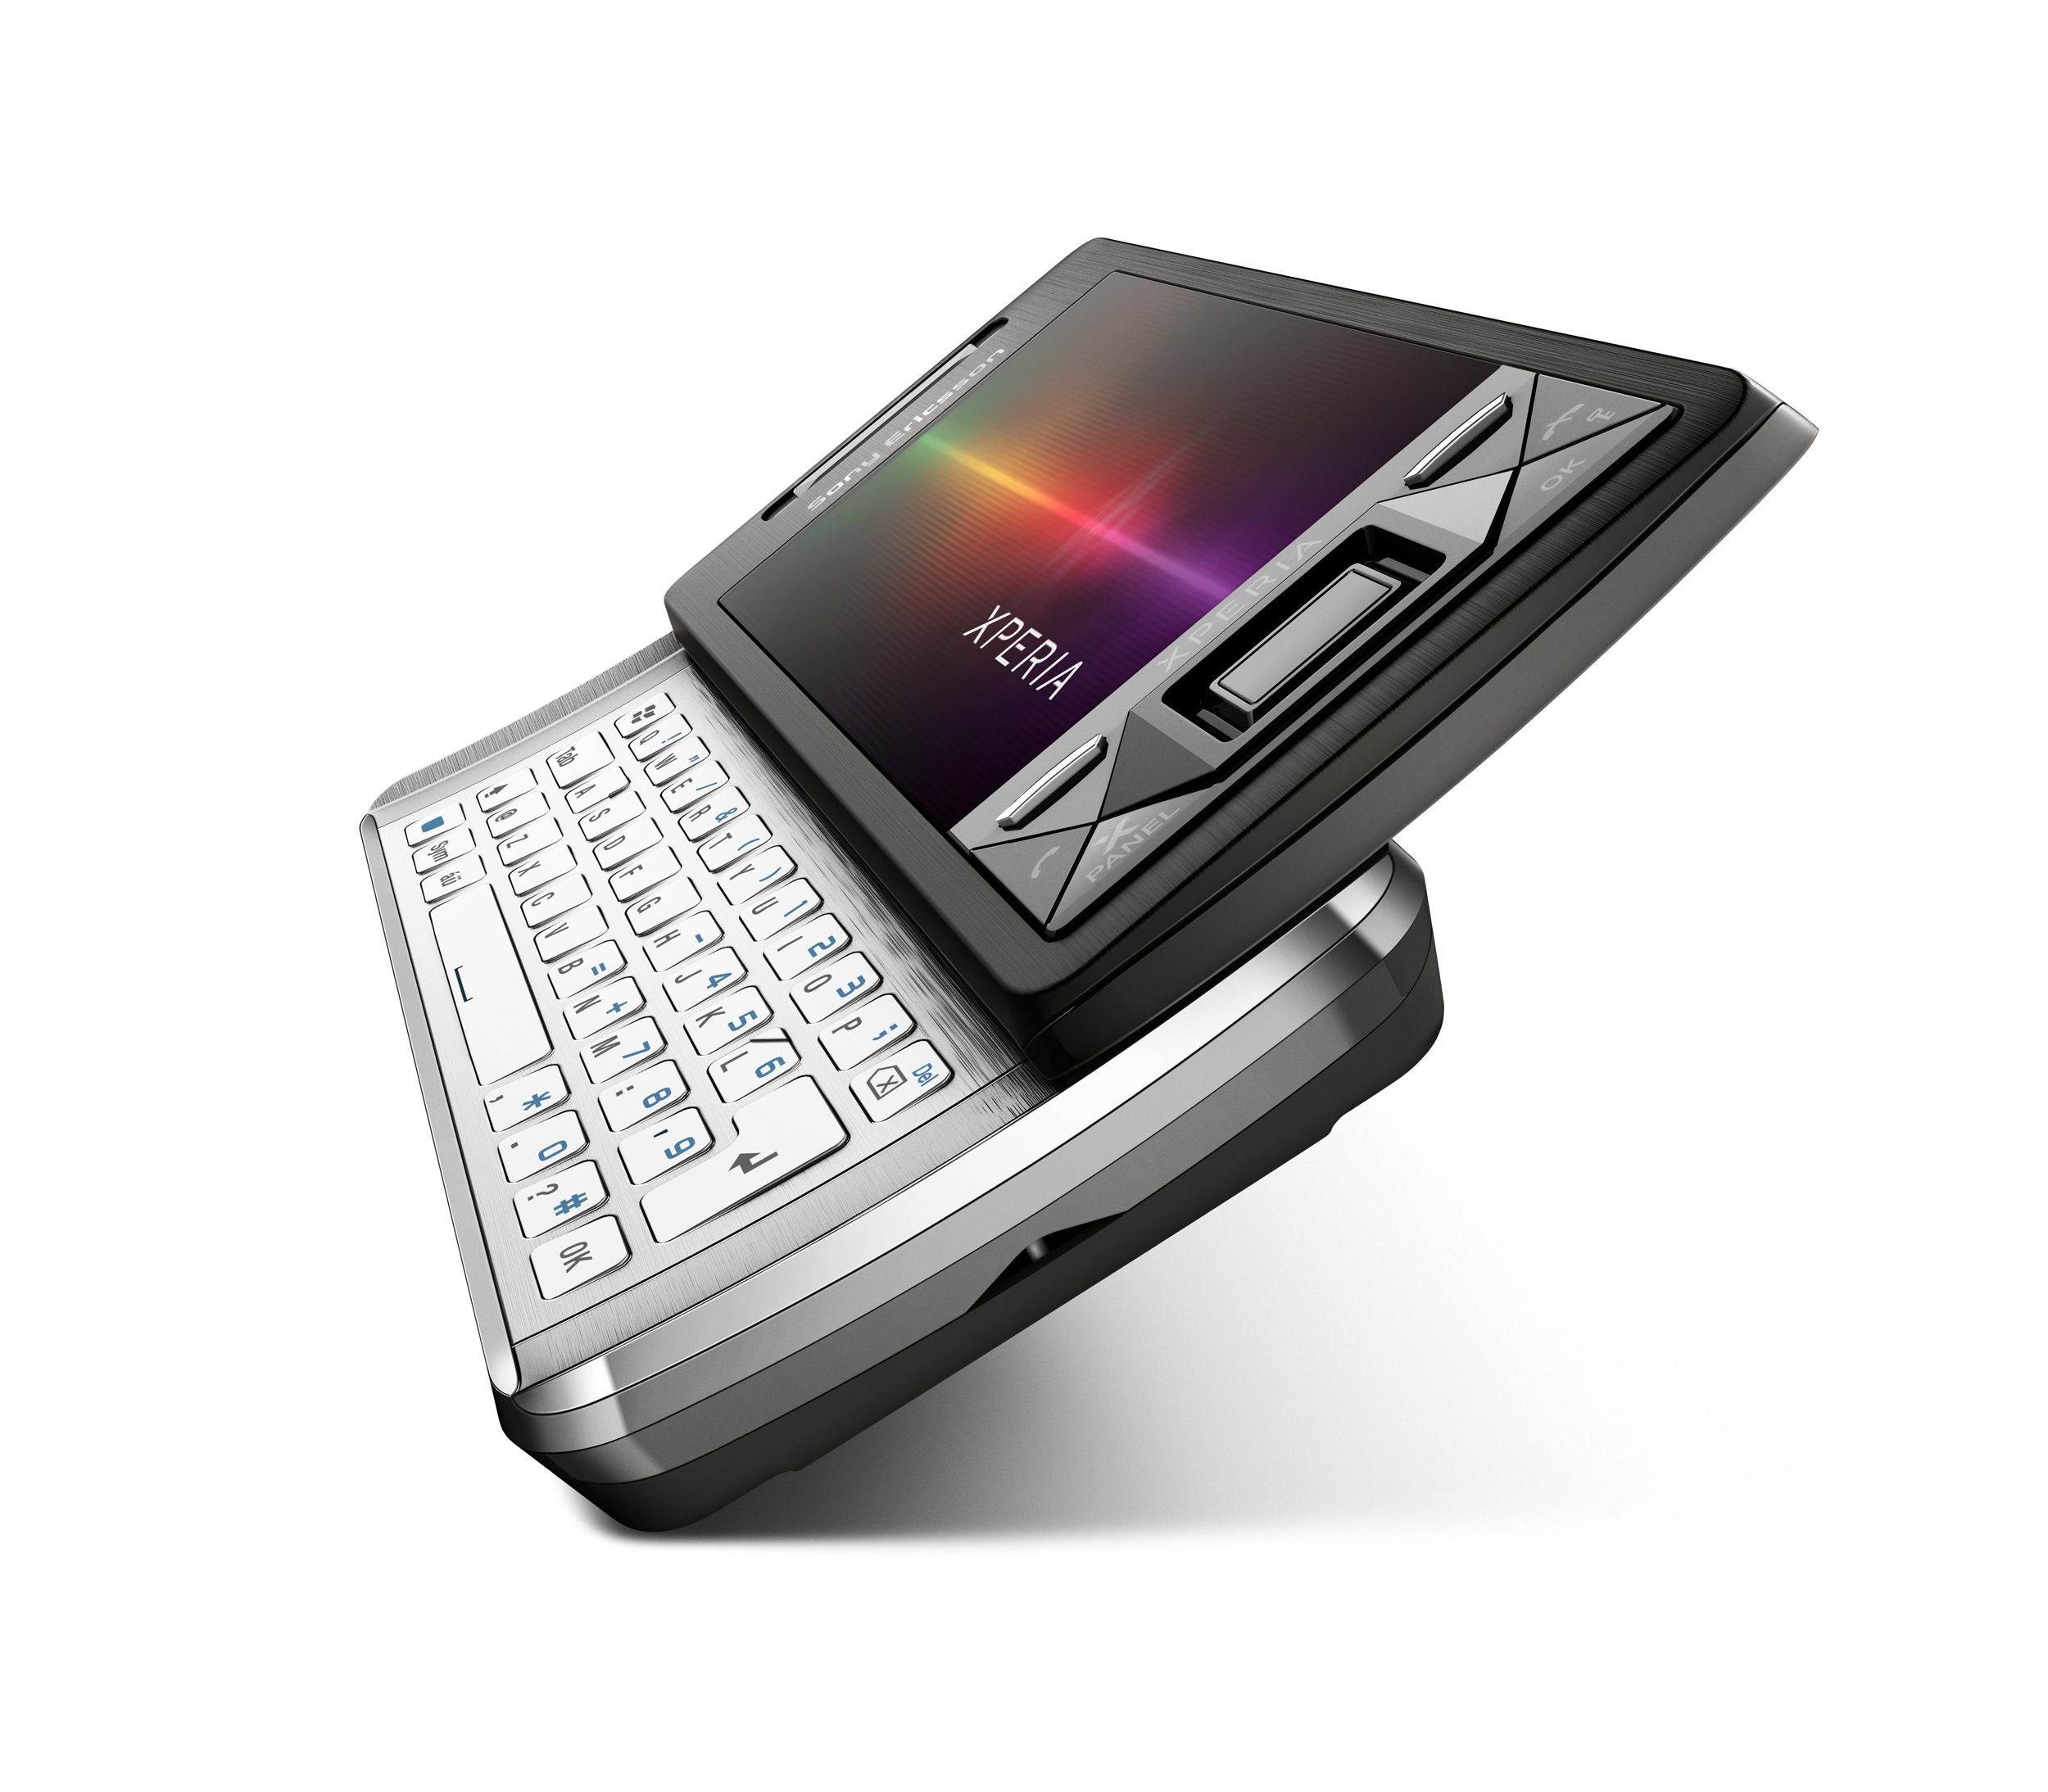 Sony Ericsson Xperia X1 picture gallery